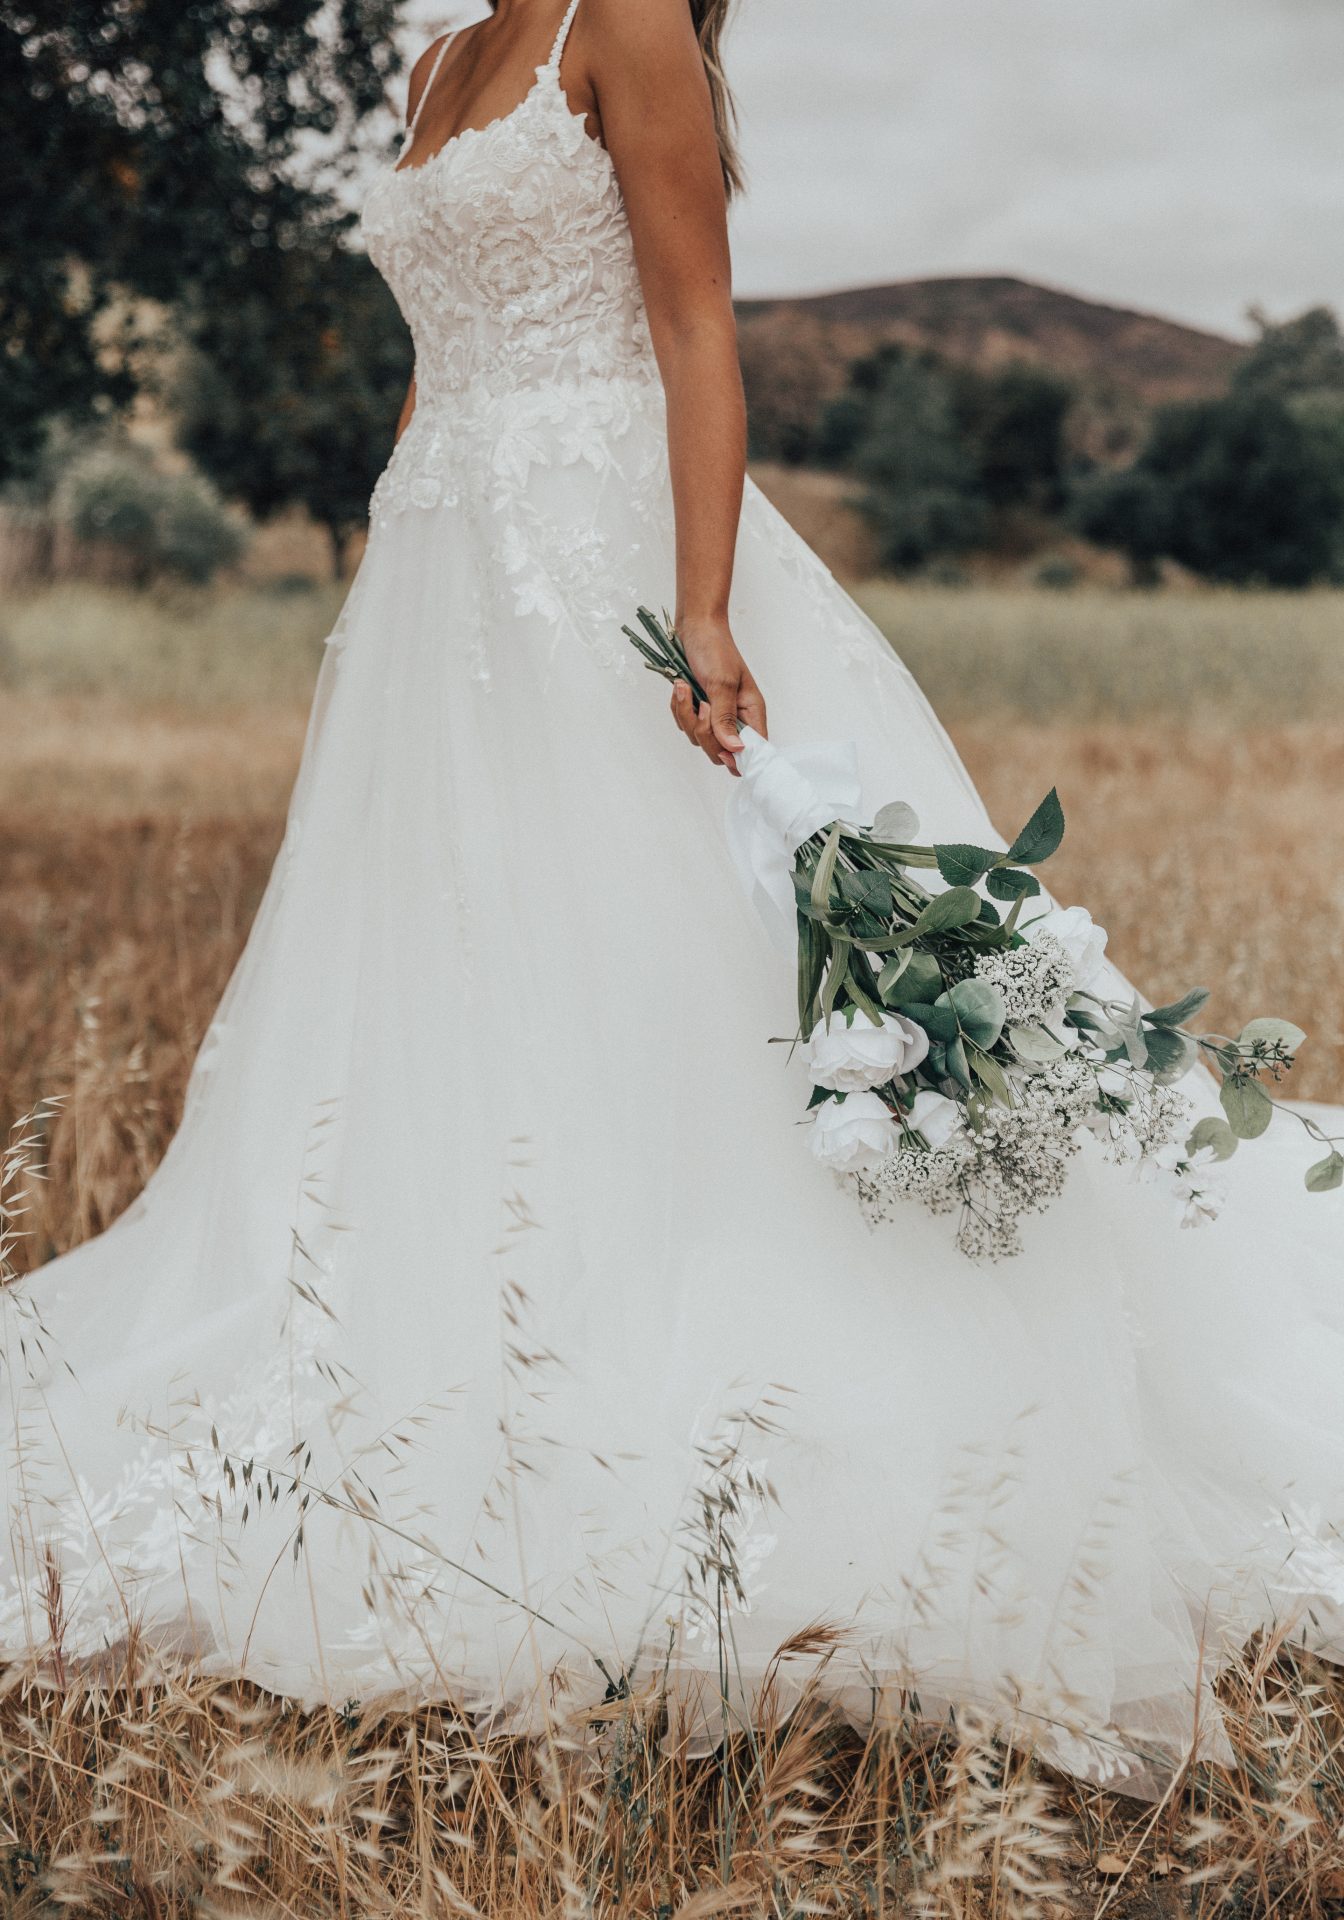 The Top 4 Advantages of Choosing an A-Line Wedding Dress - Wilkins Bridal